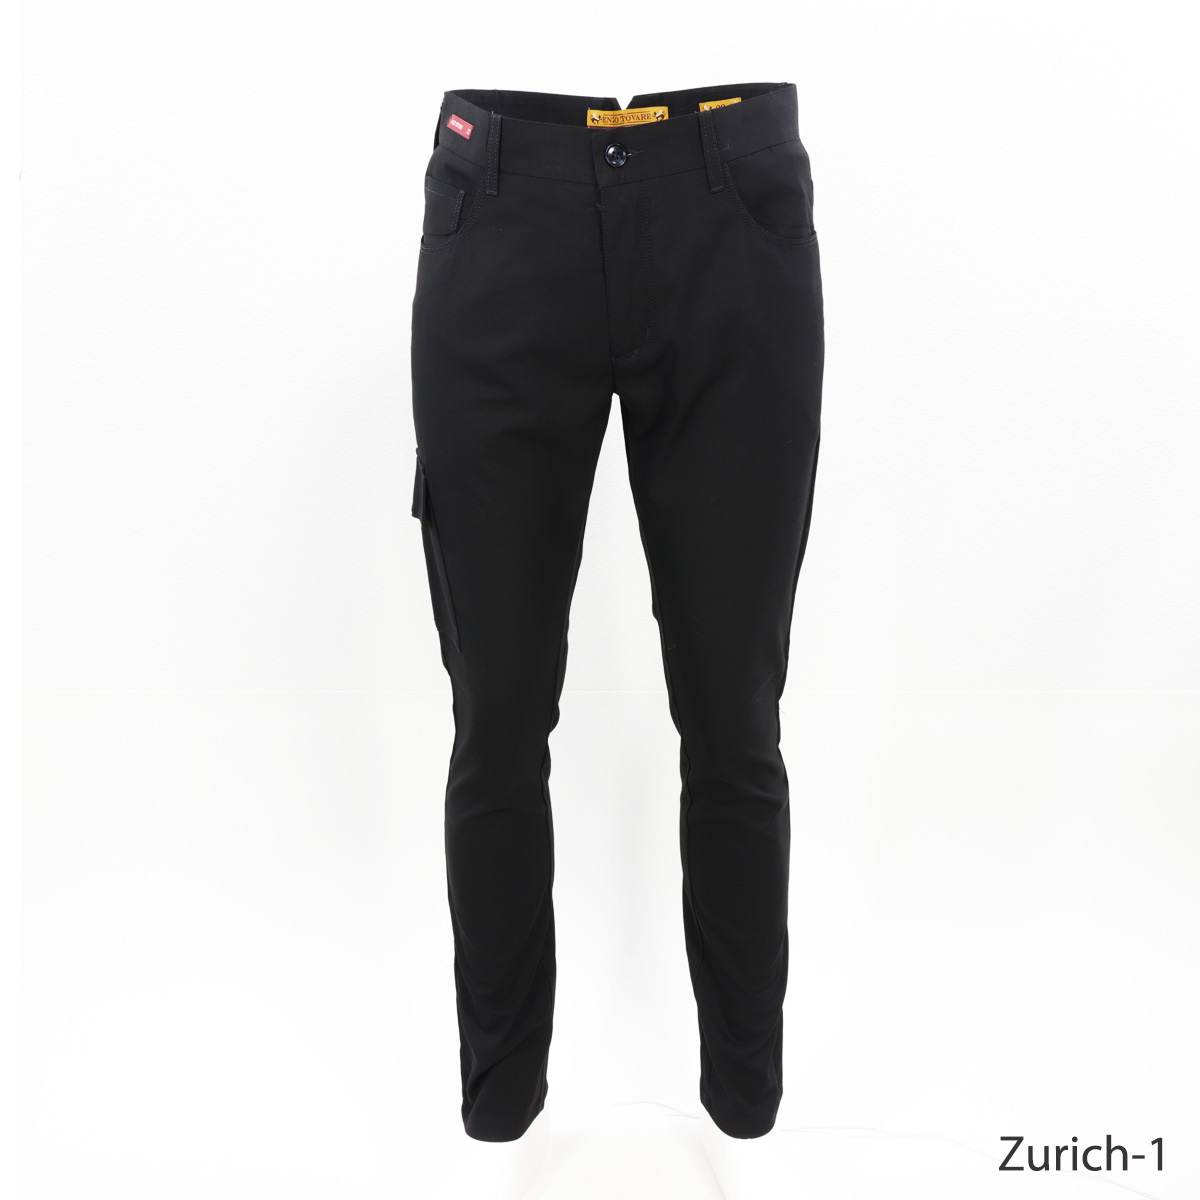 Zurich-1 Black Cargo-Jeans by Enzo Tovare in CA - Moda Italy Fashion